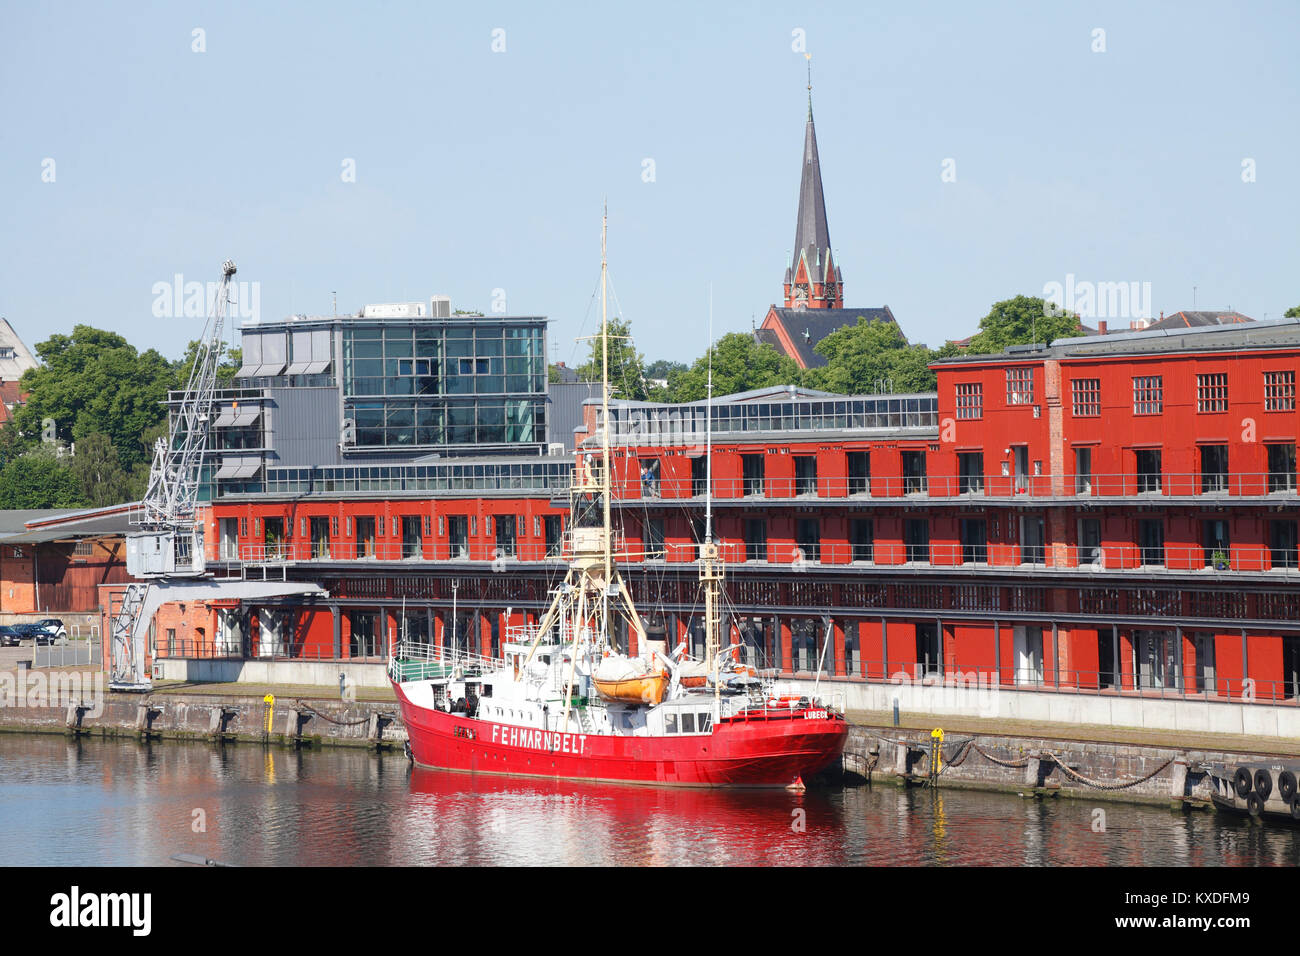 Lightship Fehmarnbelt presso il porto di Hansa con Mediadocks,Lübeck,Schleswig-Holstein, Germania Foto Stock